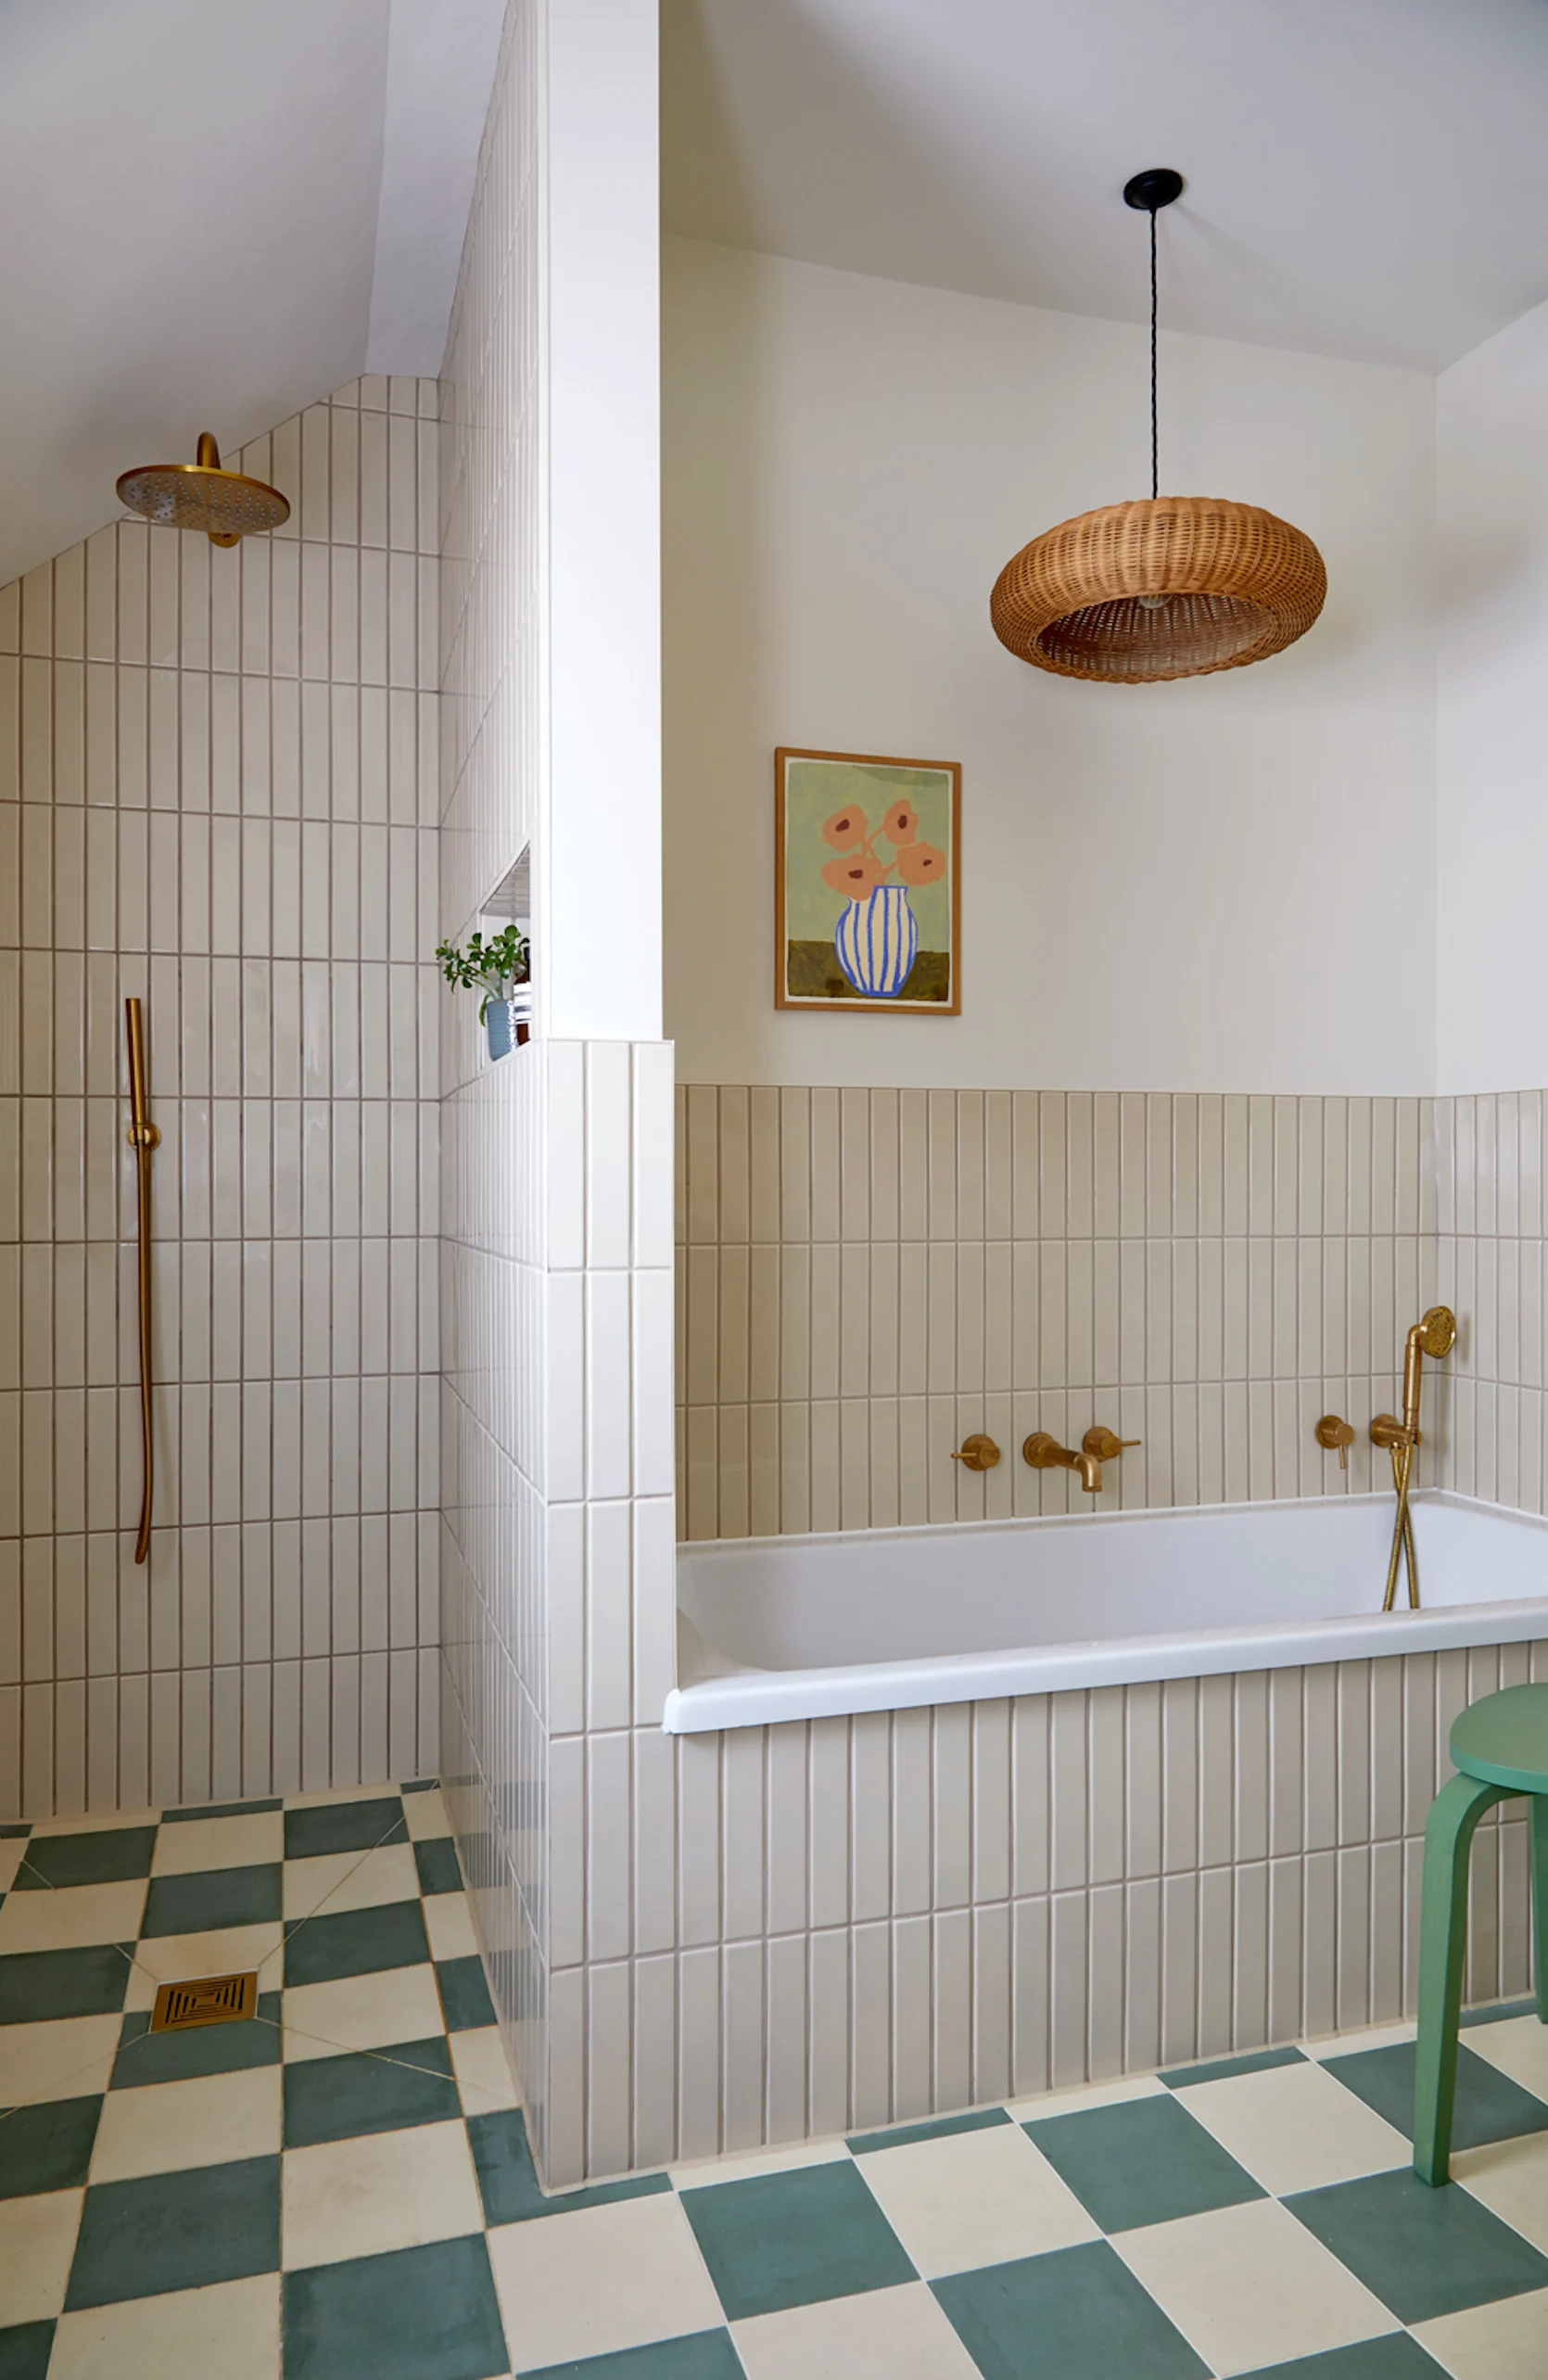 Bathroom Beauty: Explore the Latest Bathroom Designs